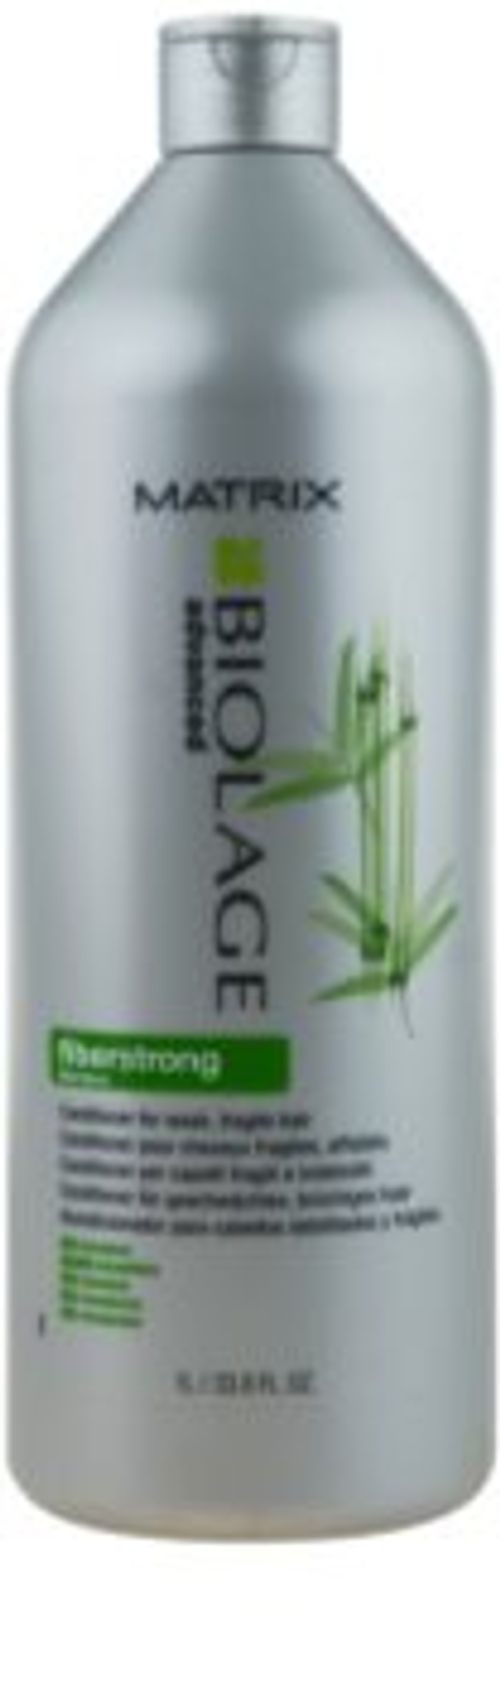 Matrix Biolage Advanced Fiberstrong Conditioner For Weak, Fragile Hair